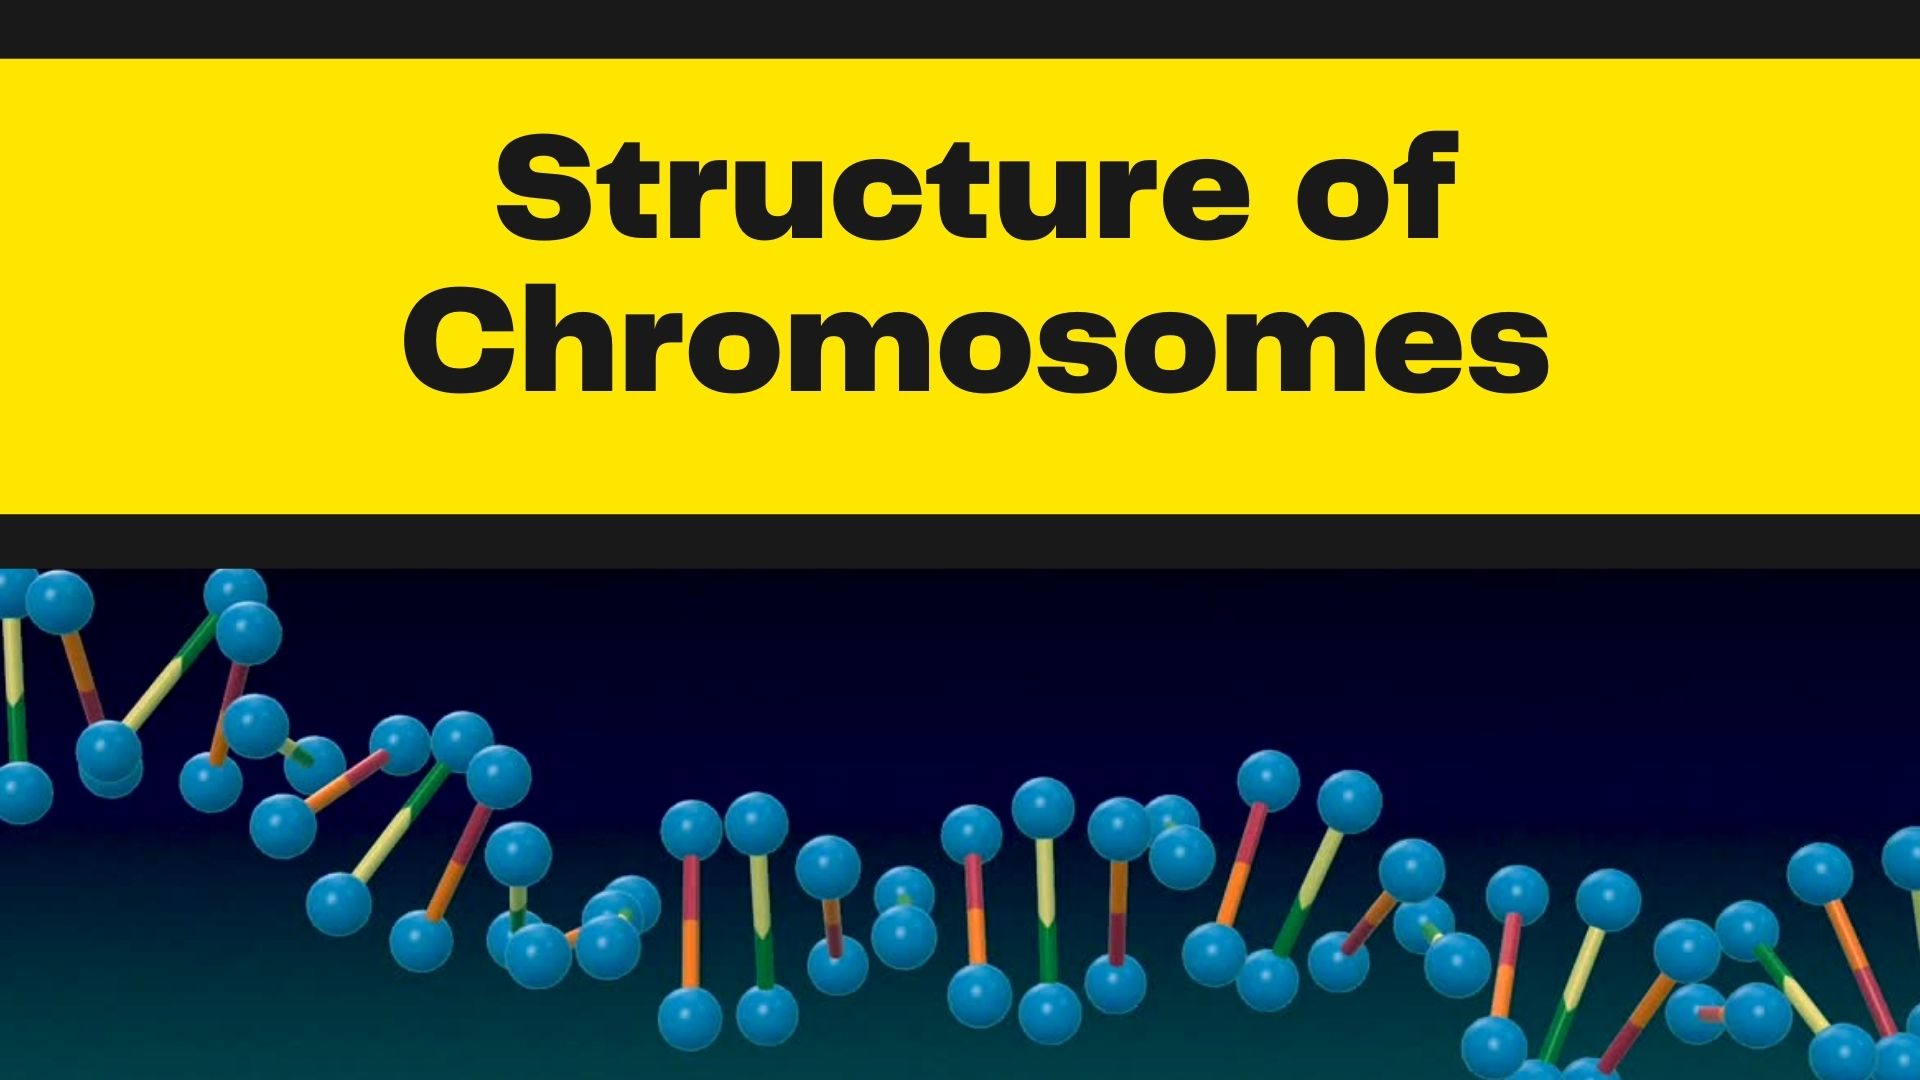 280 Homozygous Chromosome Stock Photos Pictures  RoyaltyFree Images   iStock  Dna Genetics Meiosis